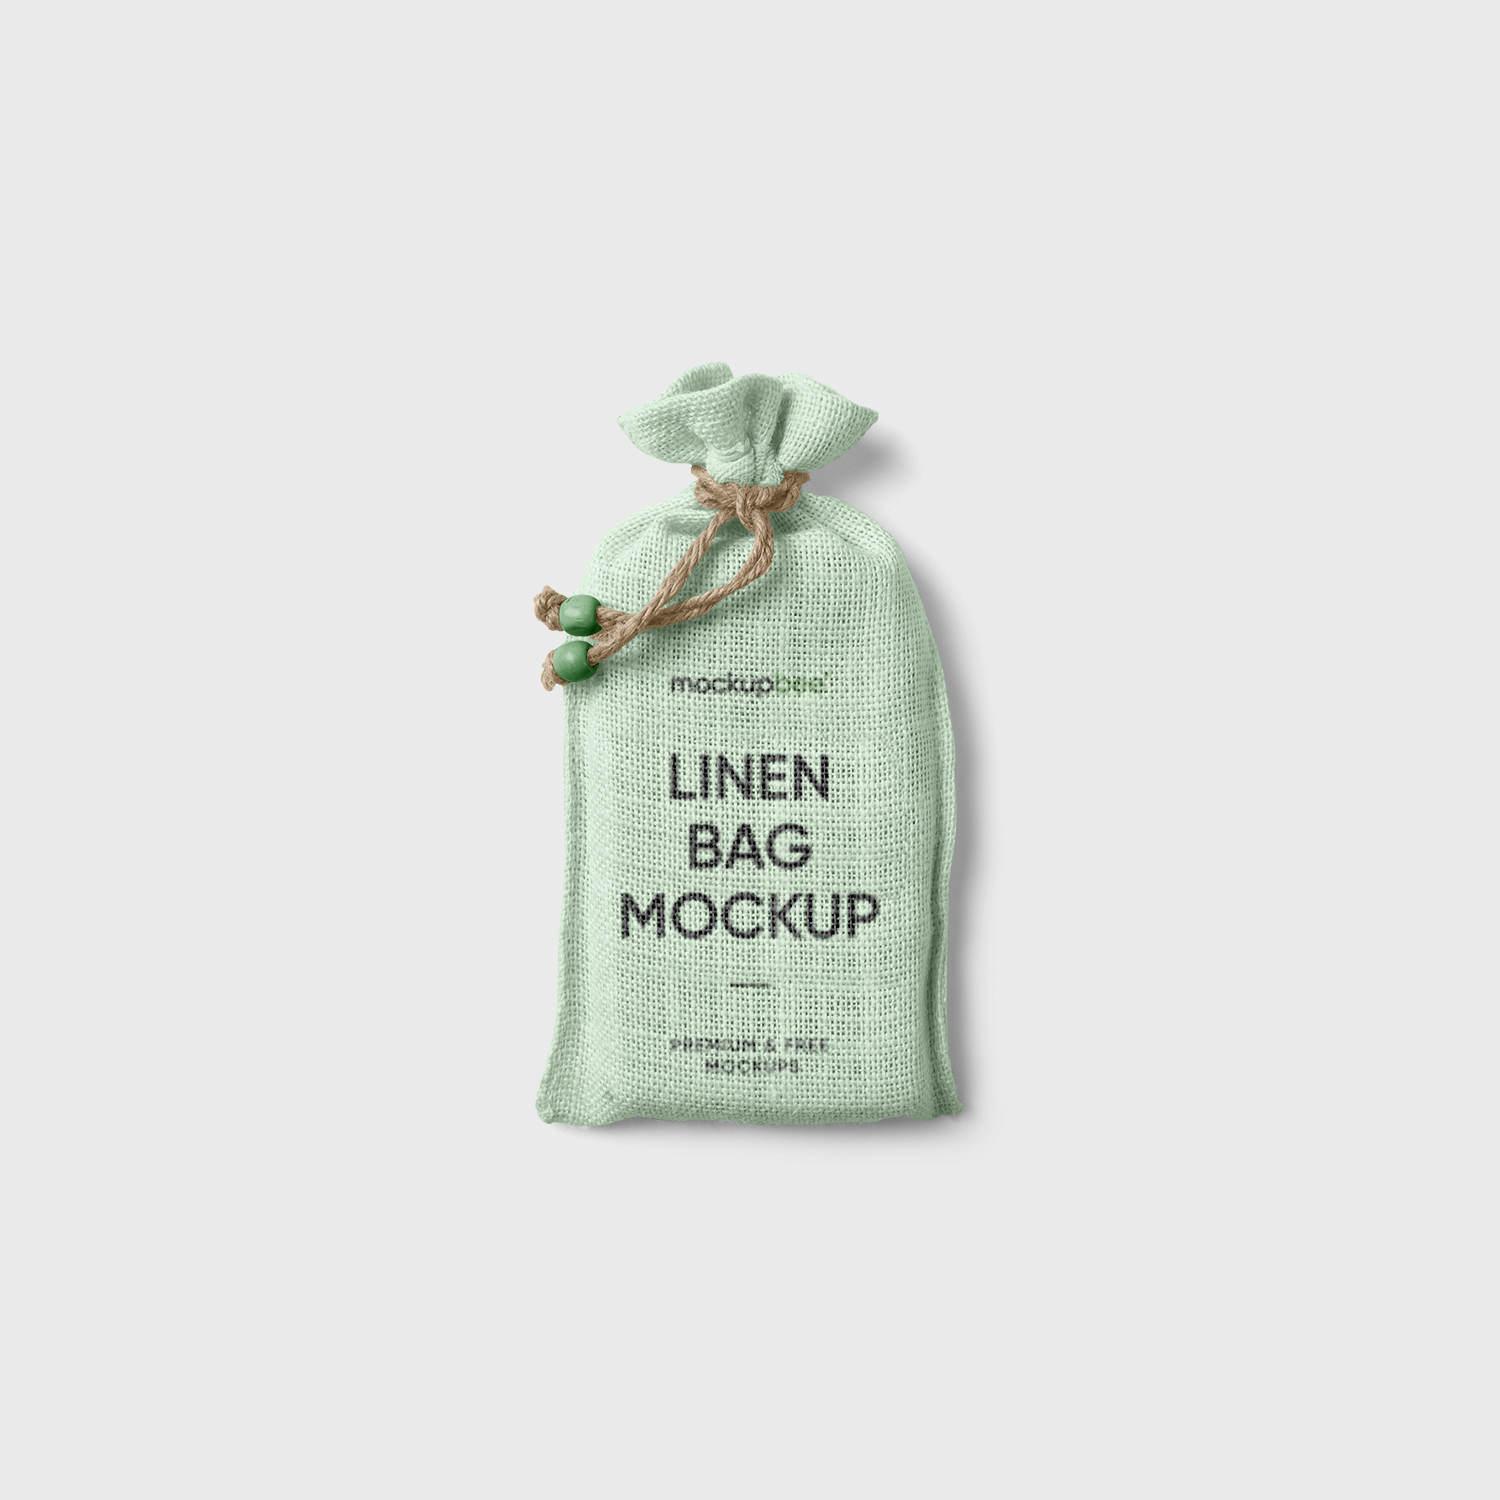 Linen Bag Free Mockup